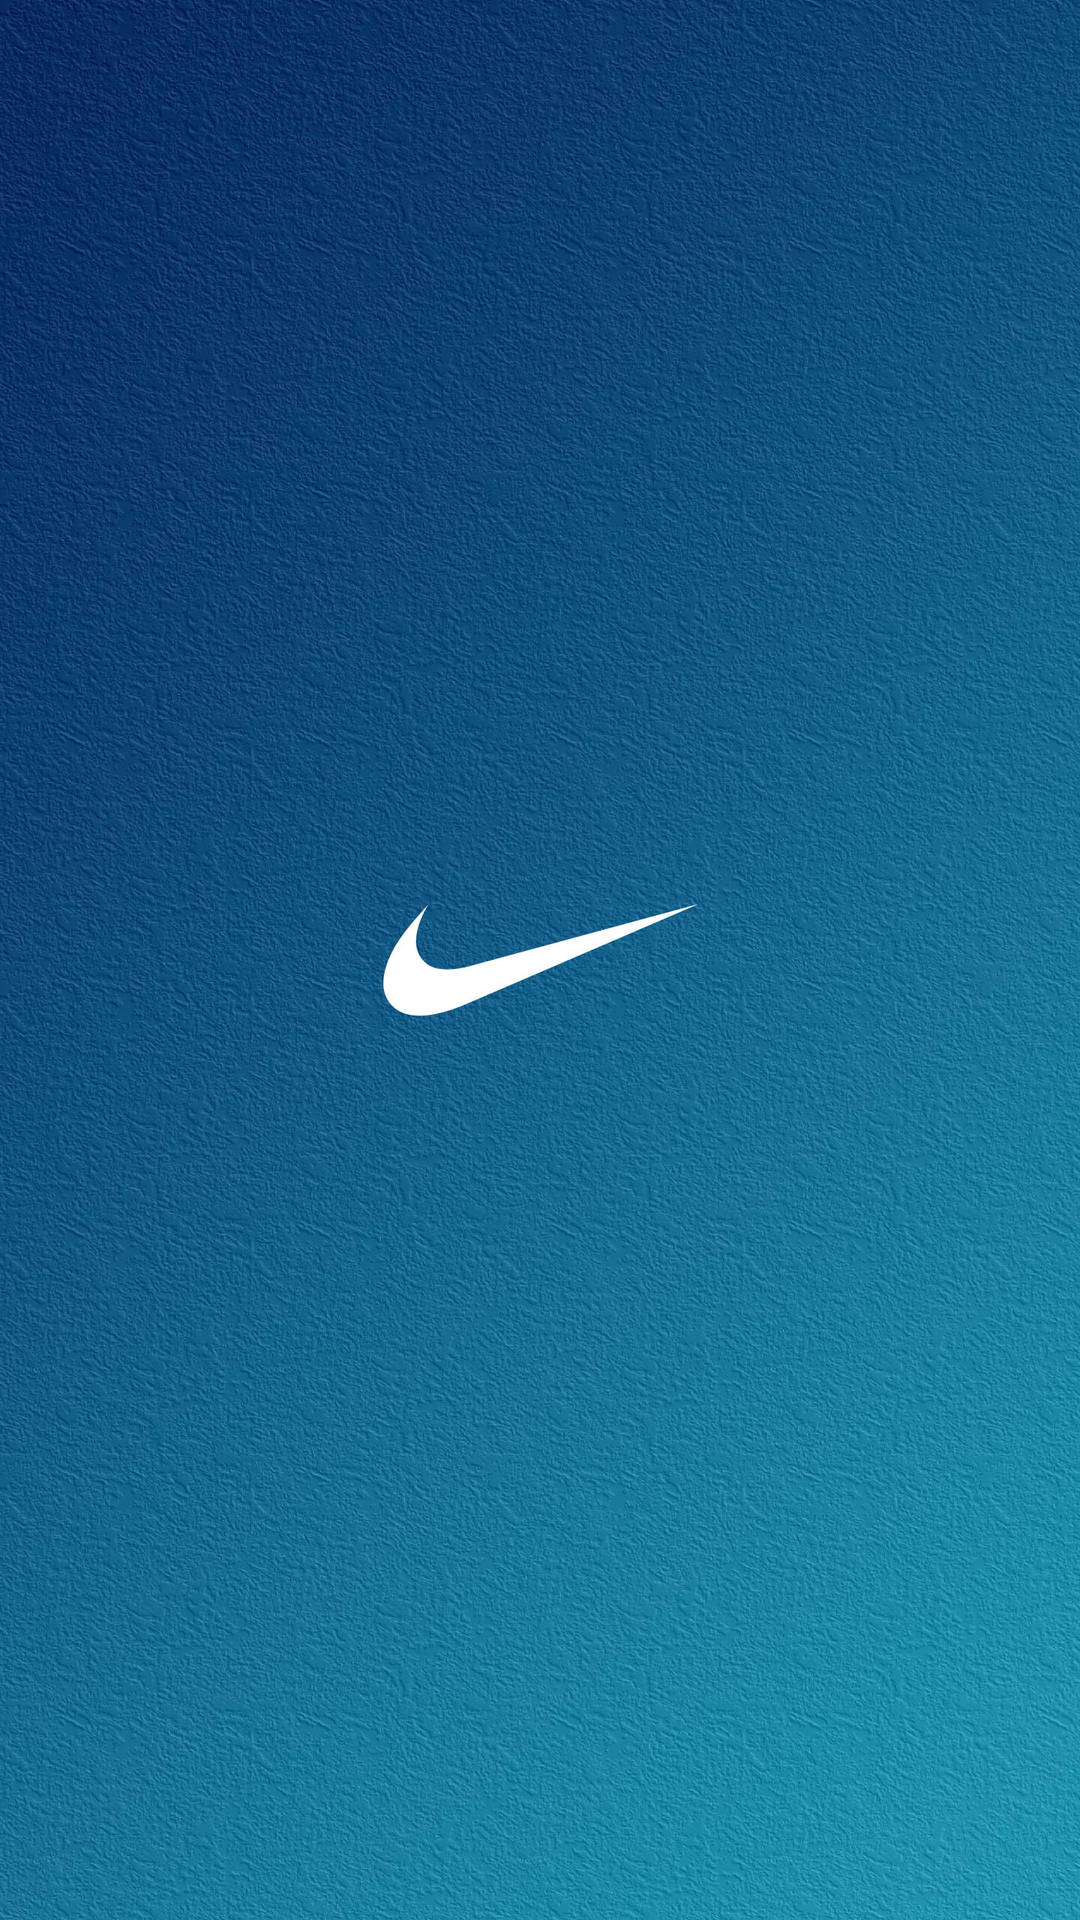 Nike Gradient Blue Basic Background